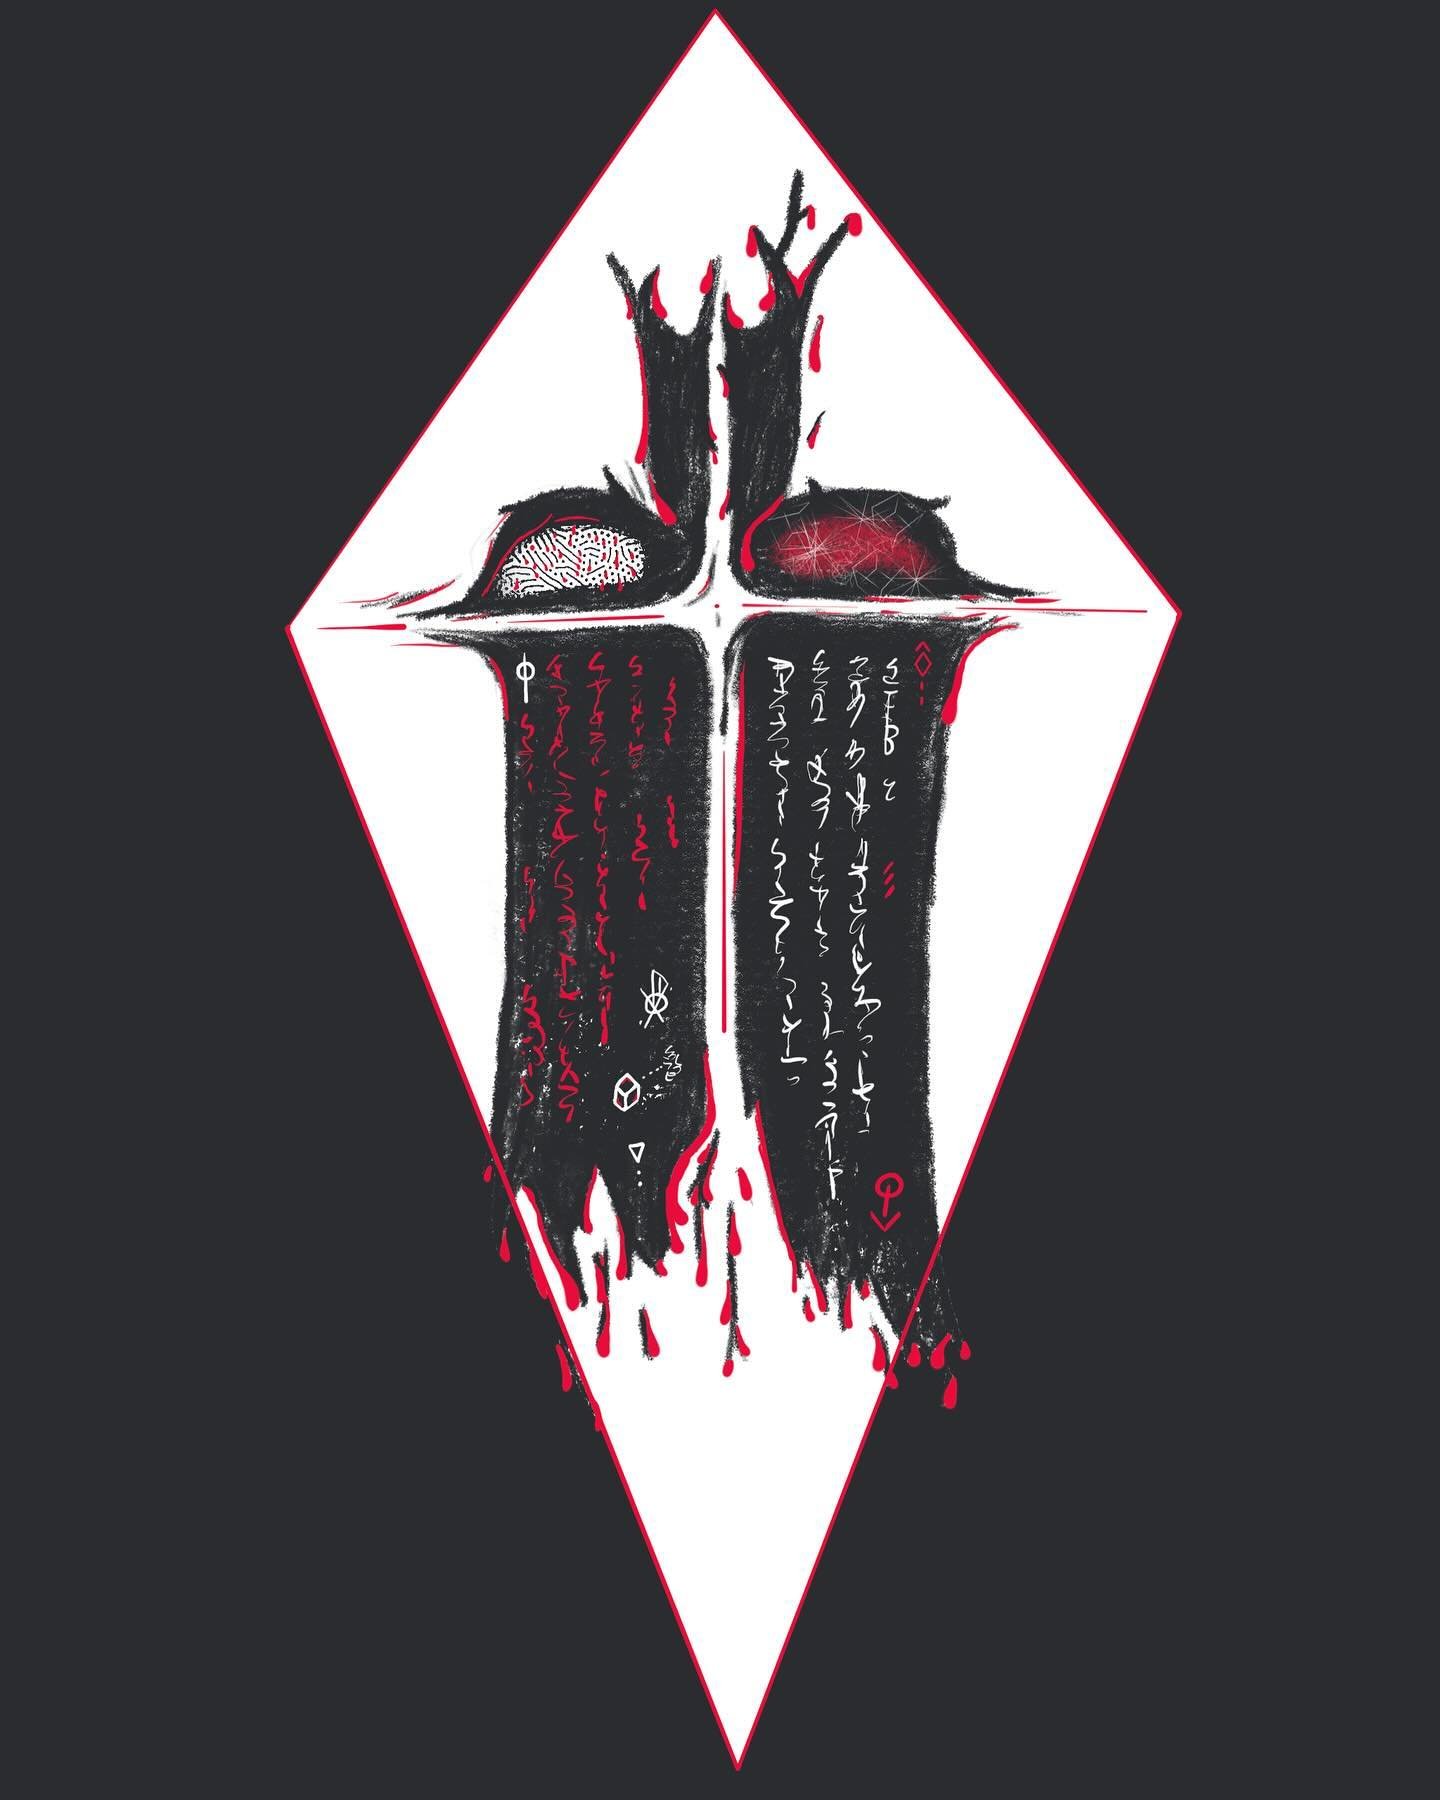 Singularity Priest
🌛🌑🌜
My latest piece of digital art.
.
.
.
#digitalart #sketch #procreate #horrorart #black #red #blackandred #norgrove #nerdjive #artist #artistsoninstagram